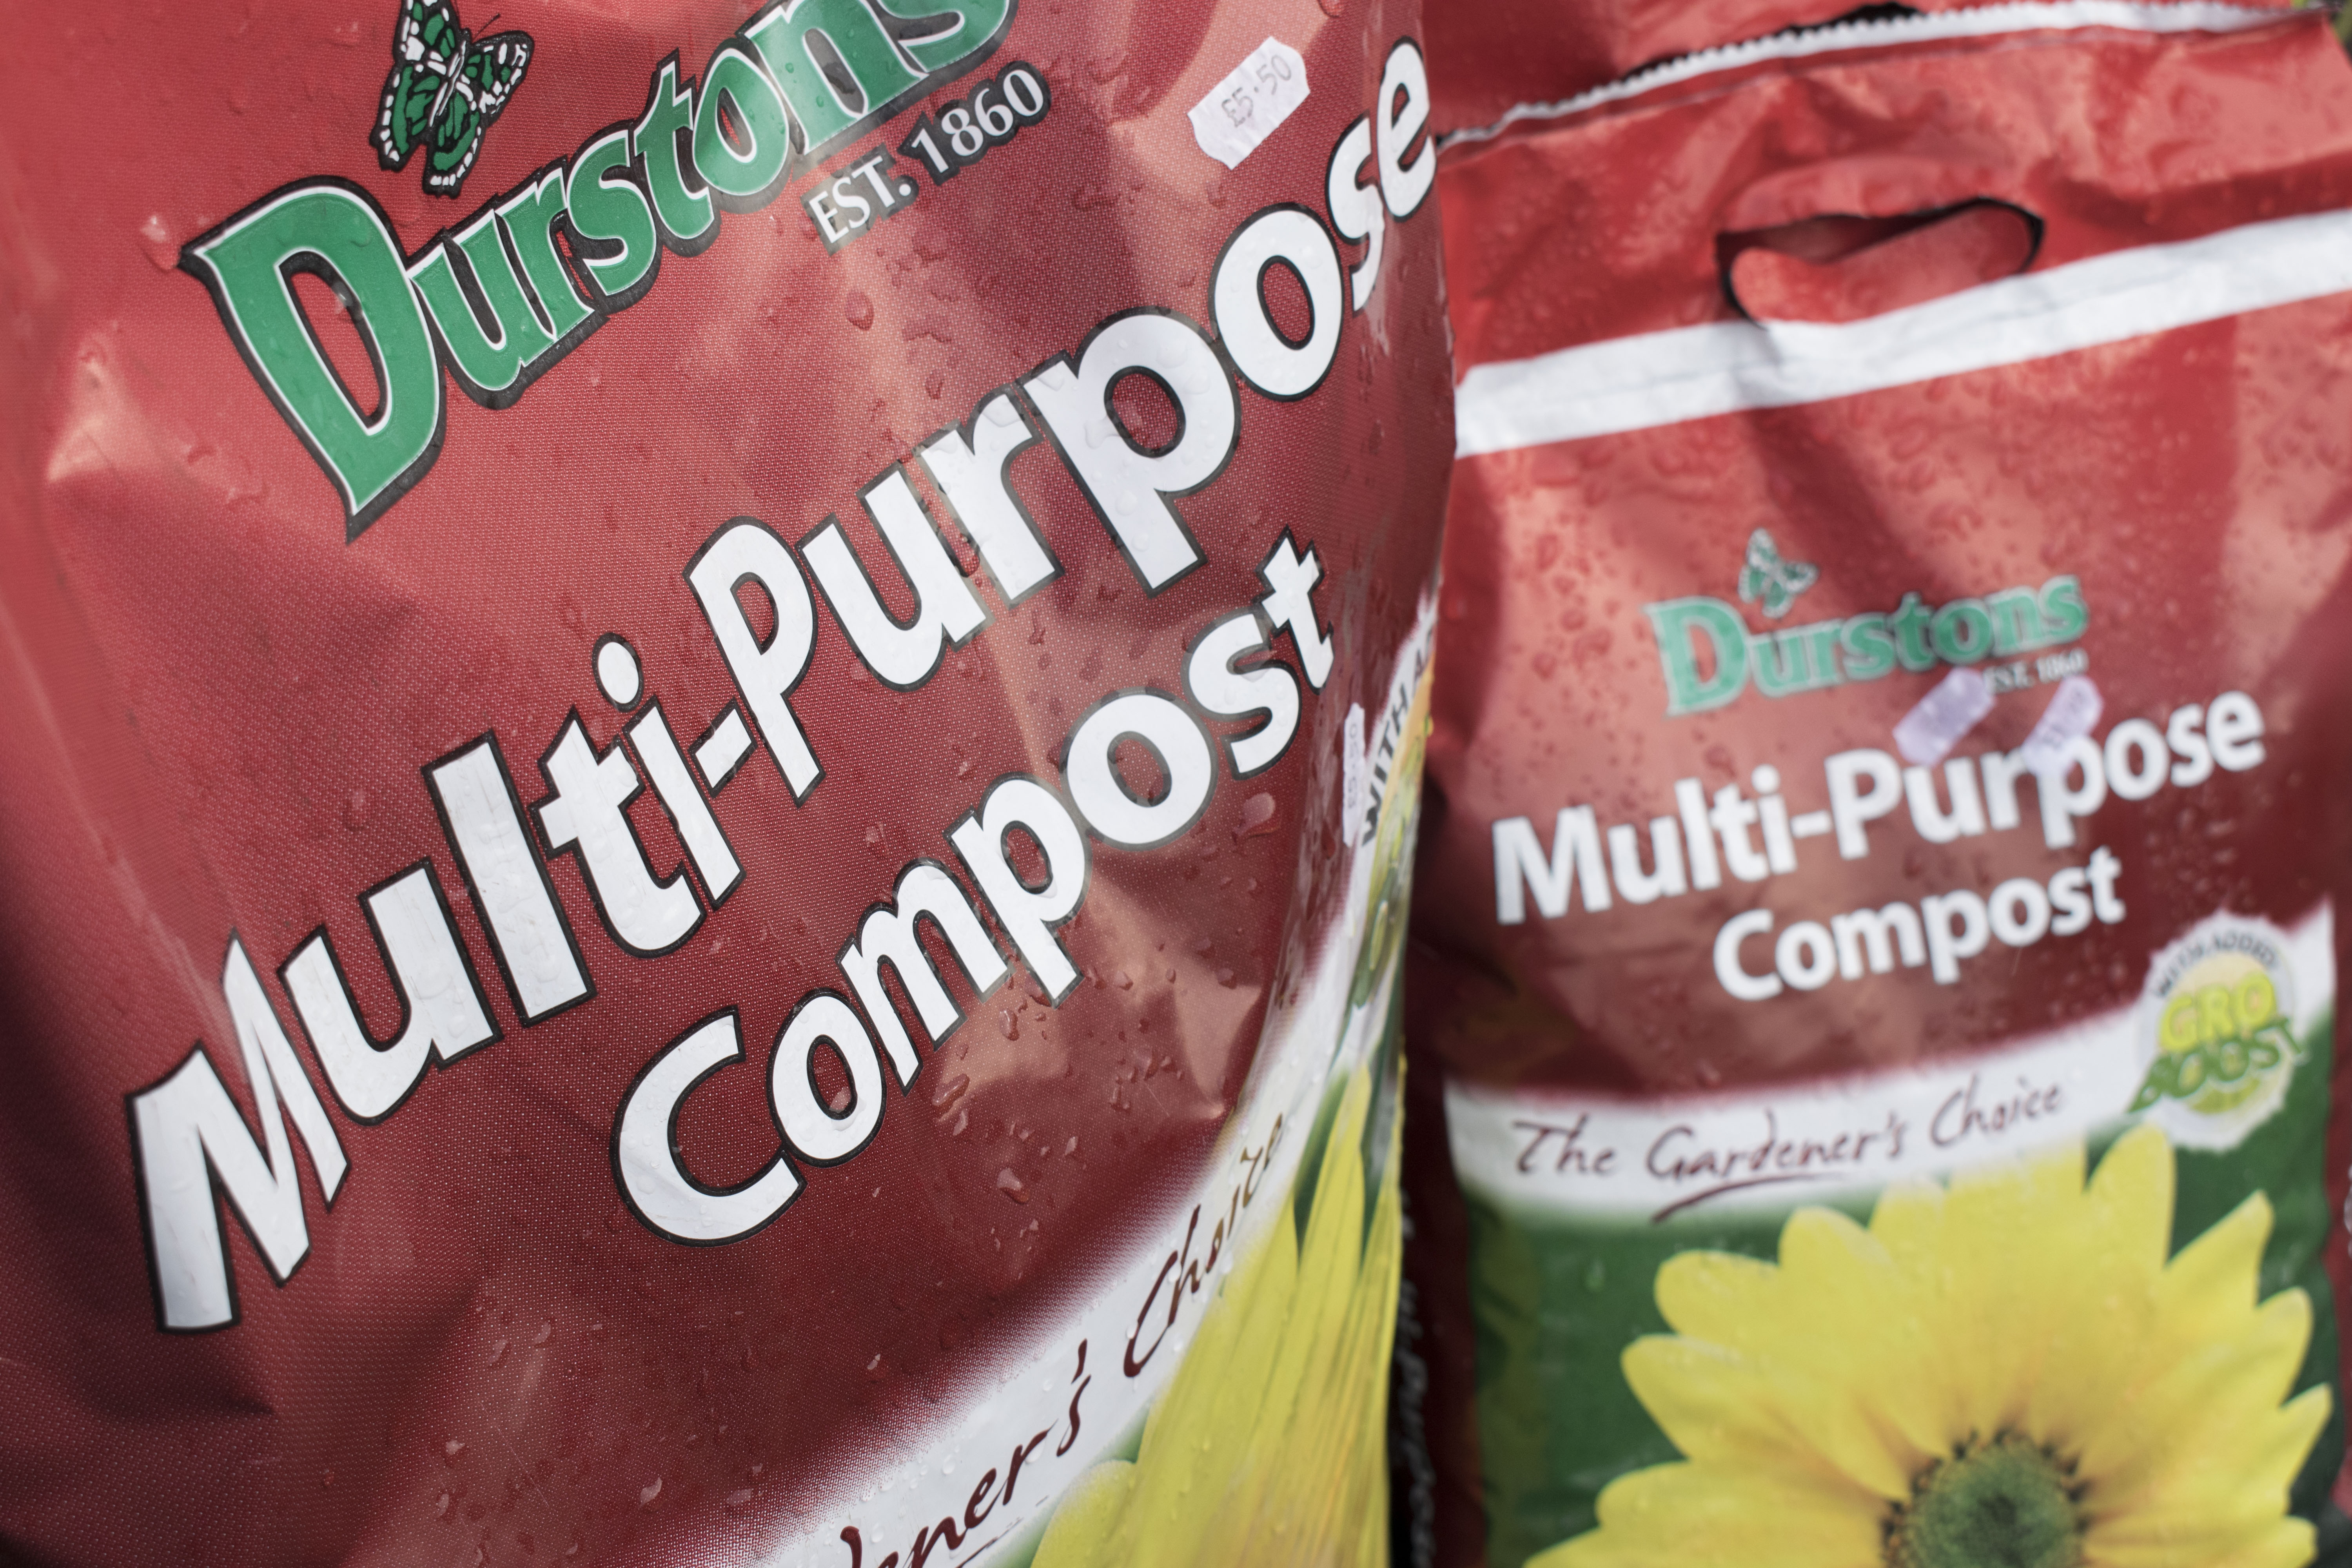 Bags of multi purpose compost